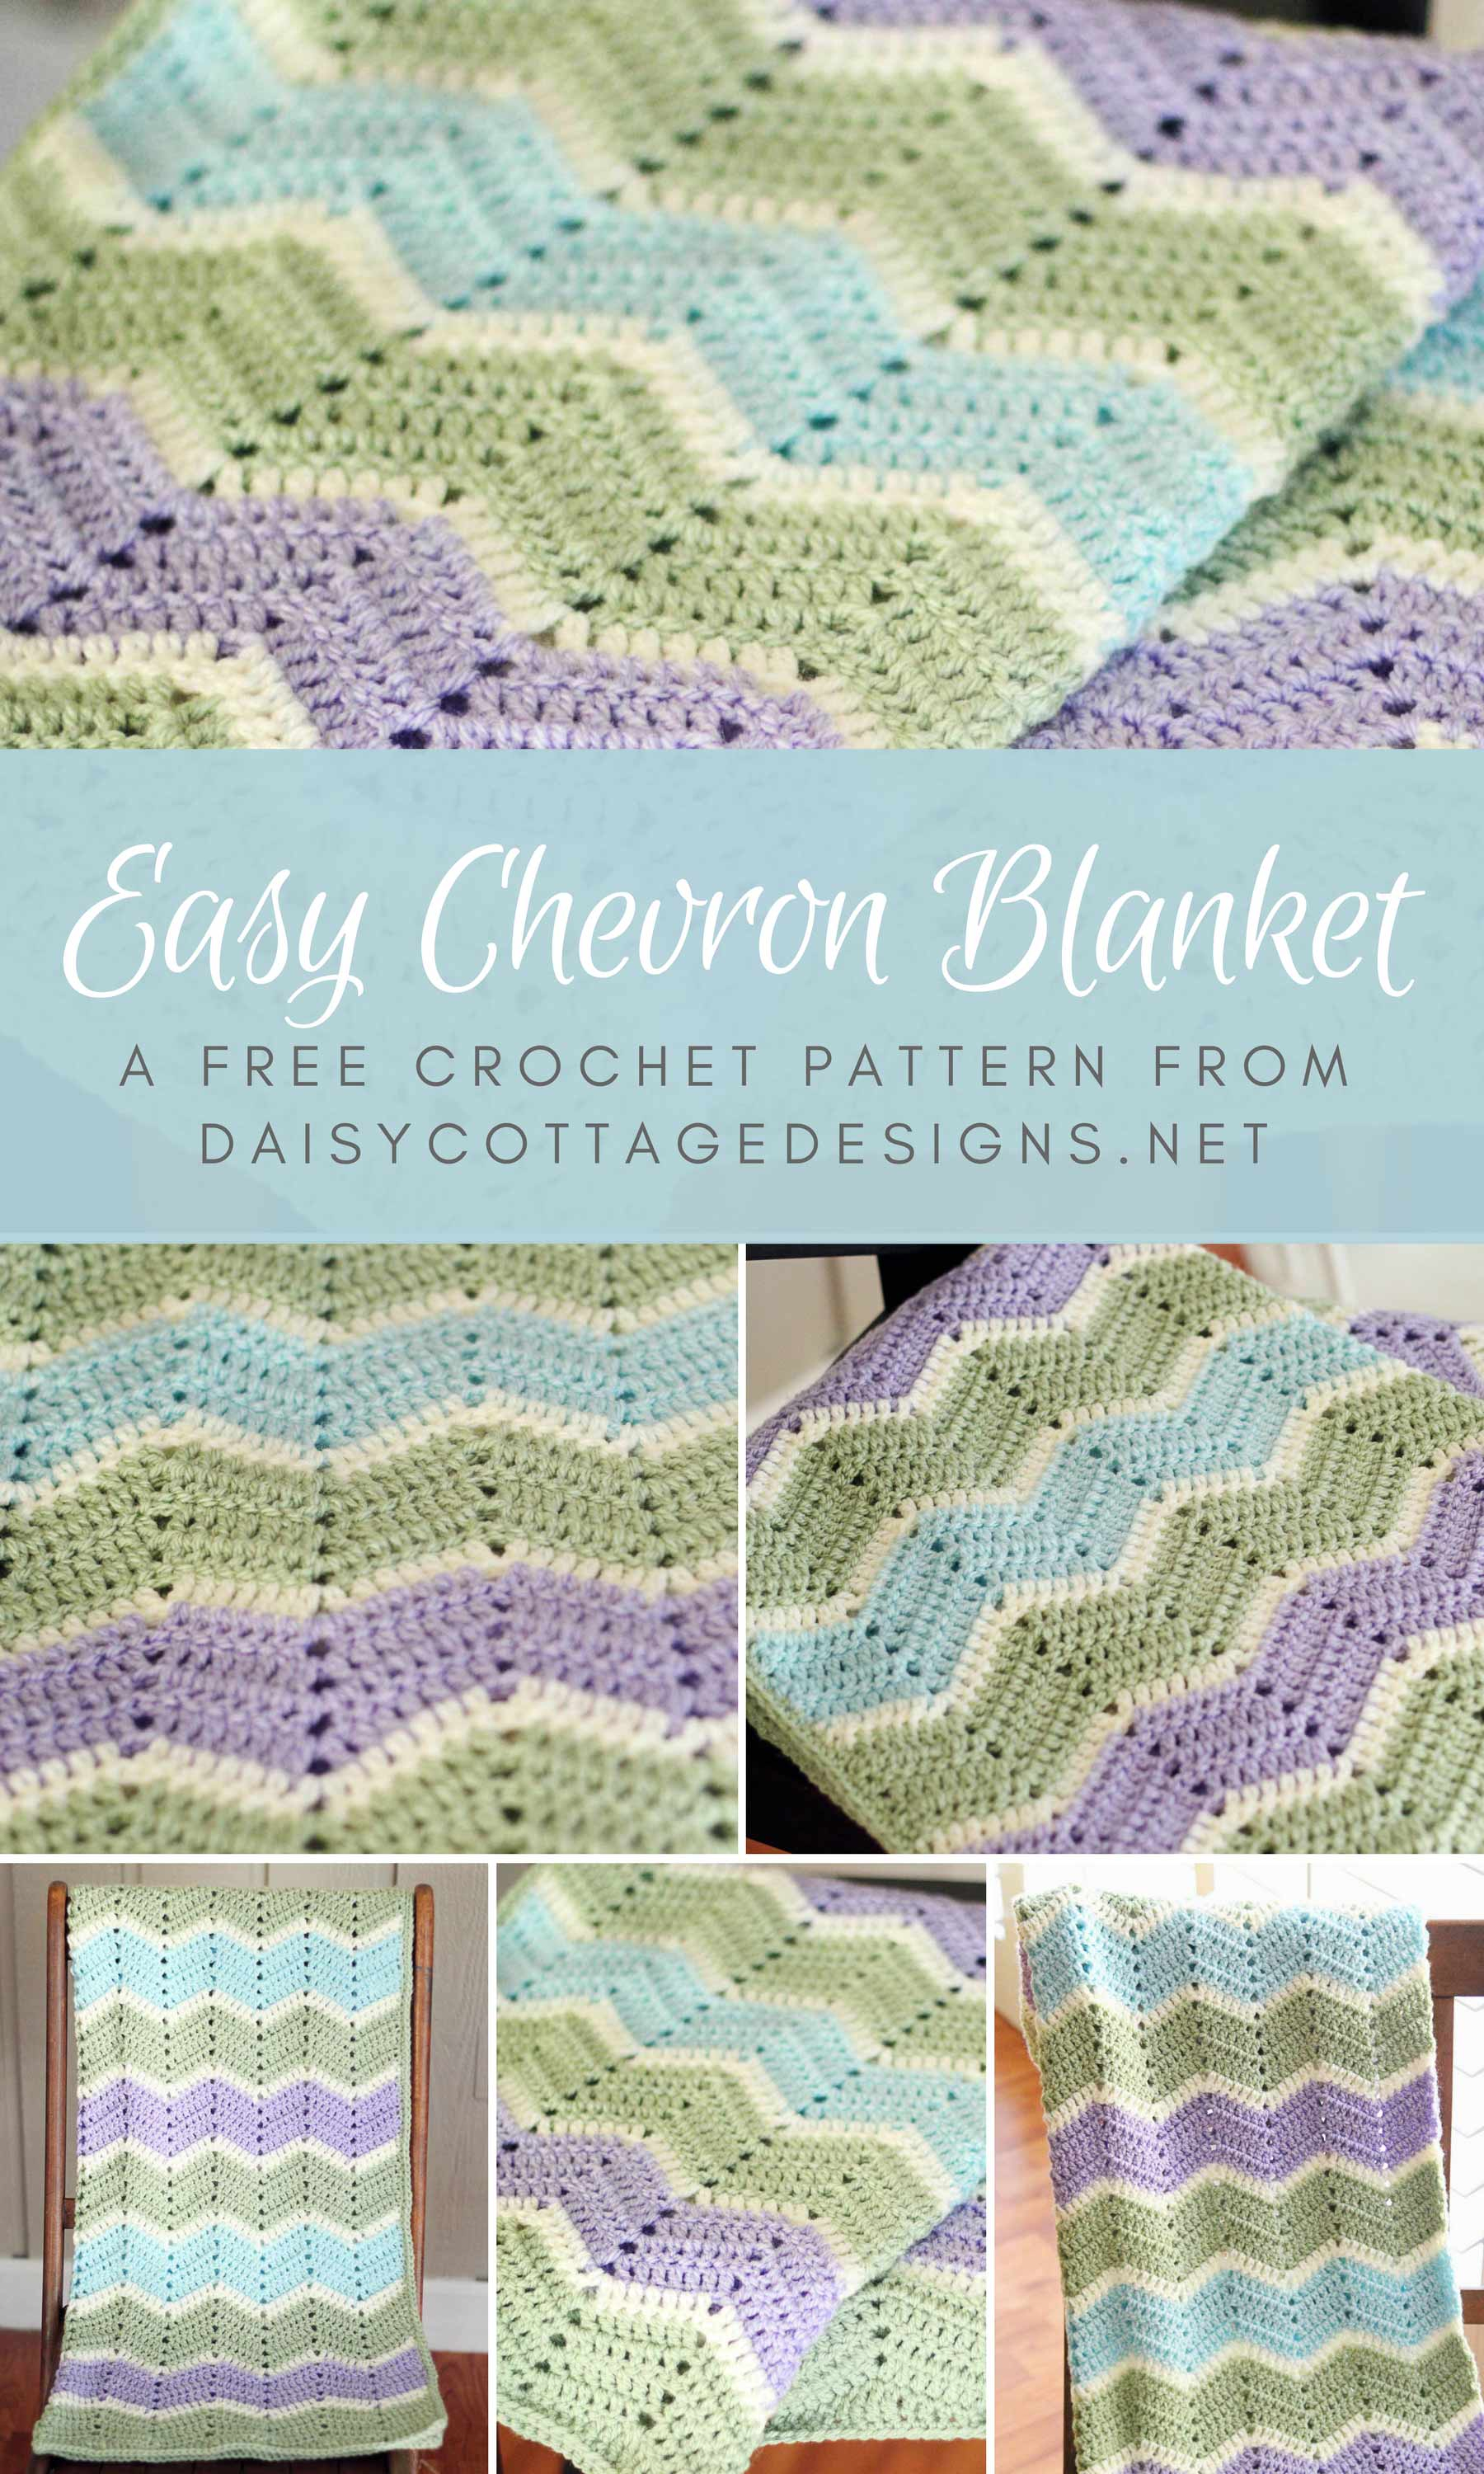 Free Baby Afghan Crochet Patterns Easy Chevron Blanket Crochet Pattern Daisy Cottage Designs